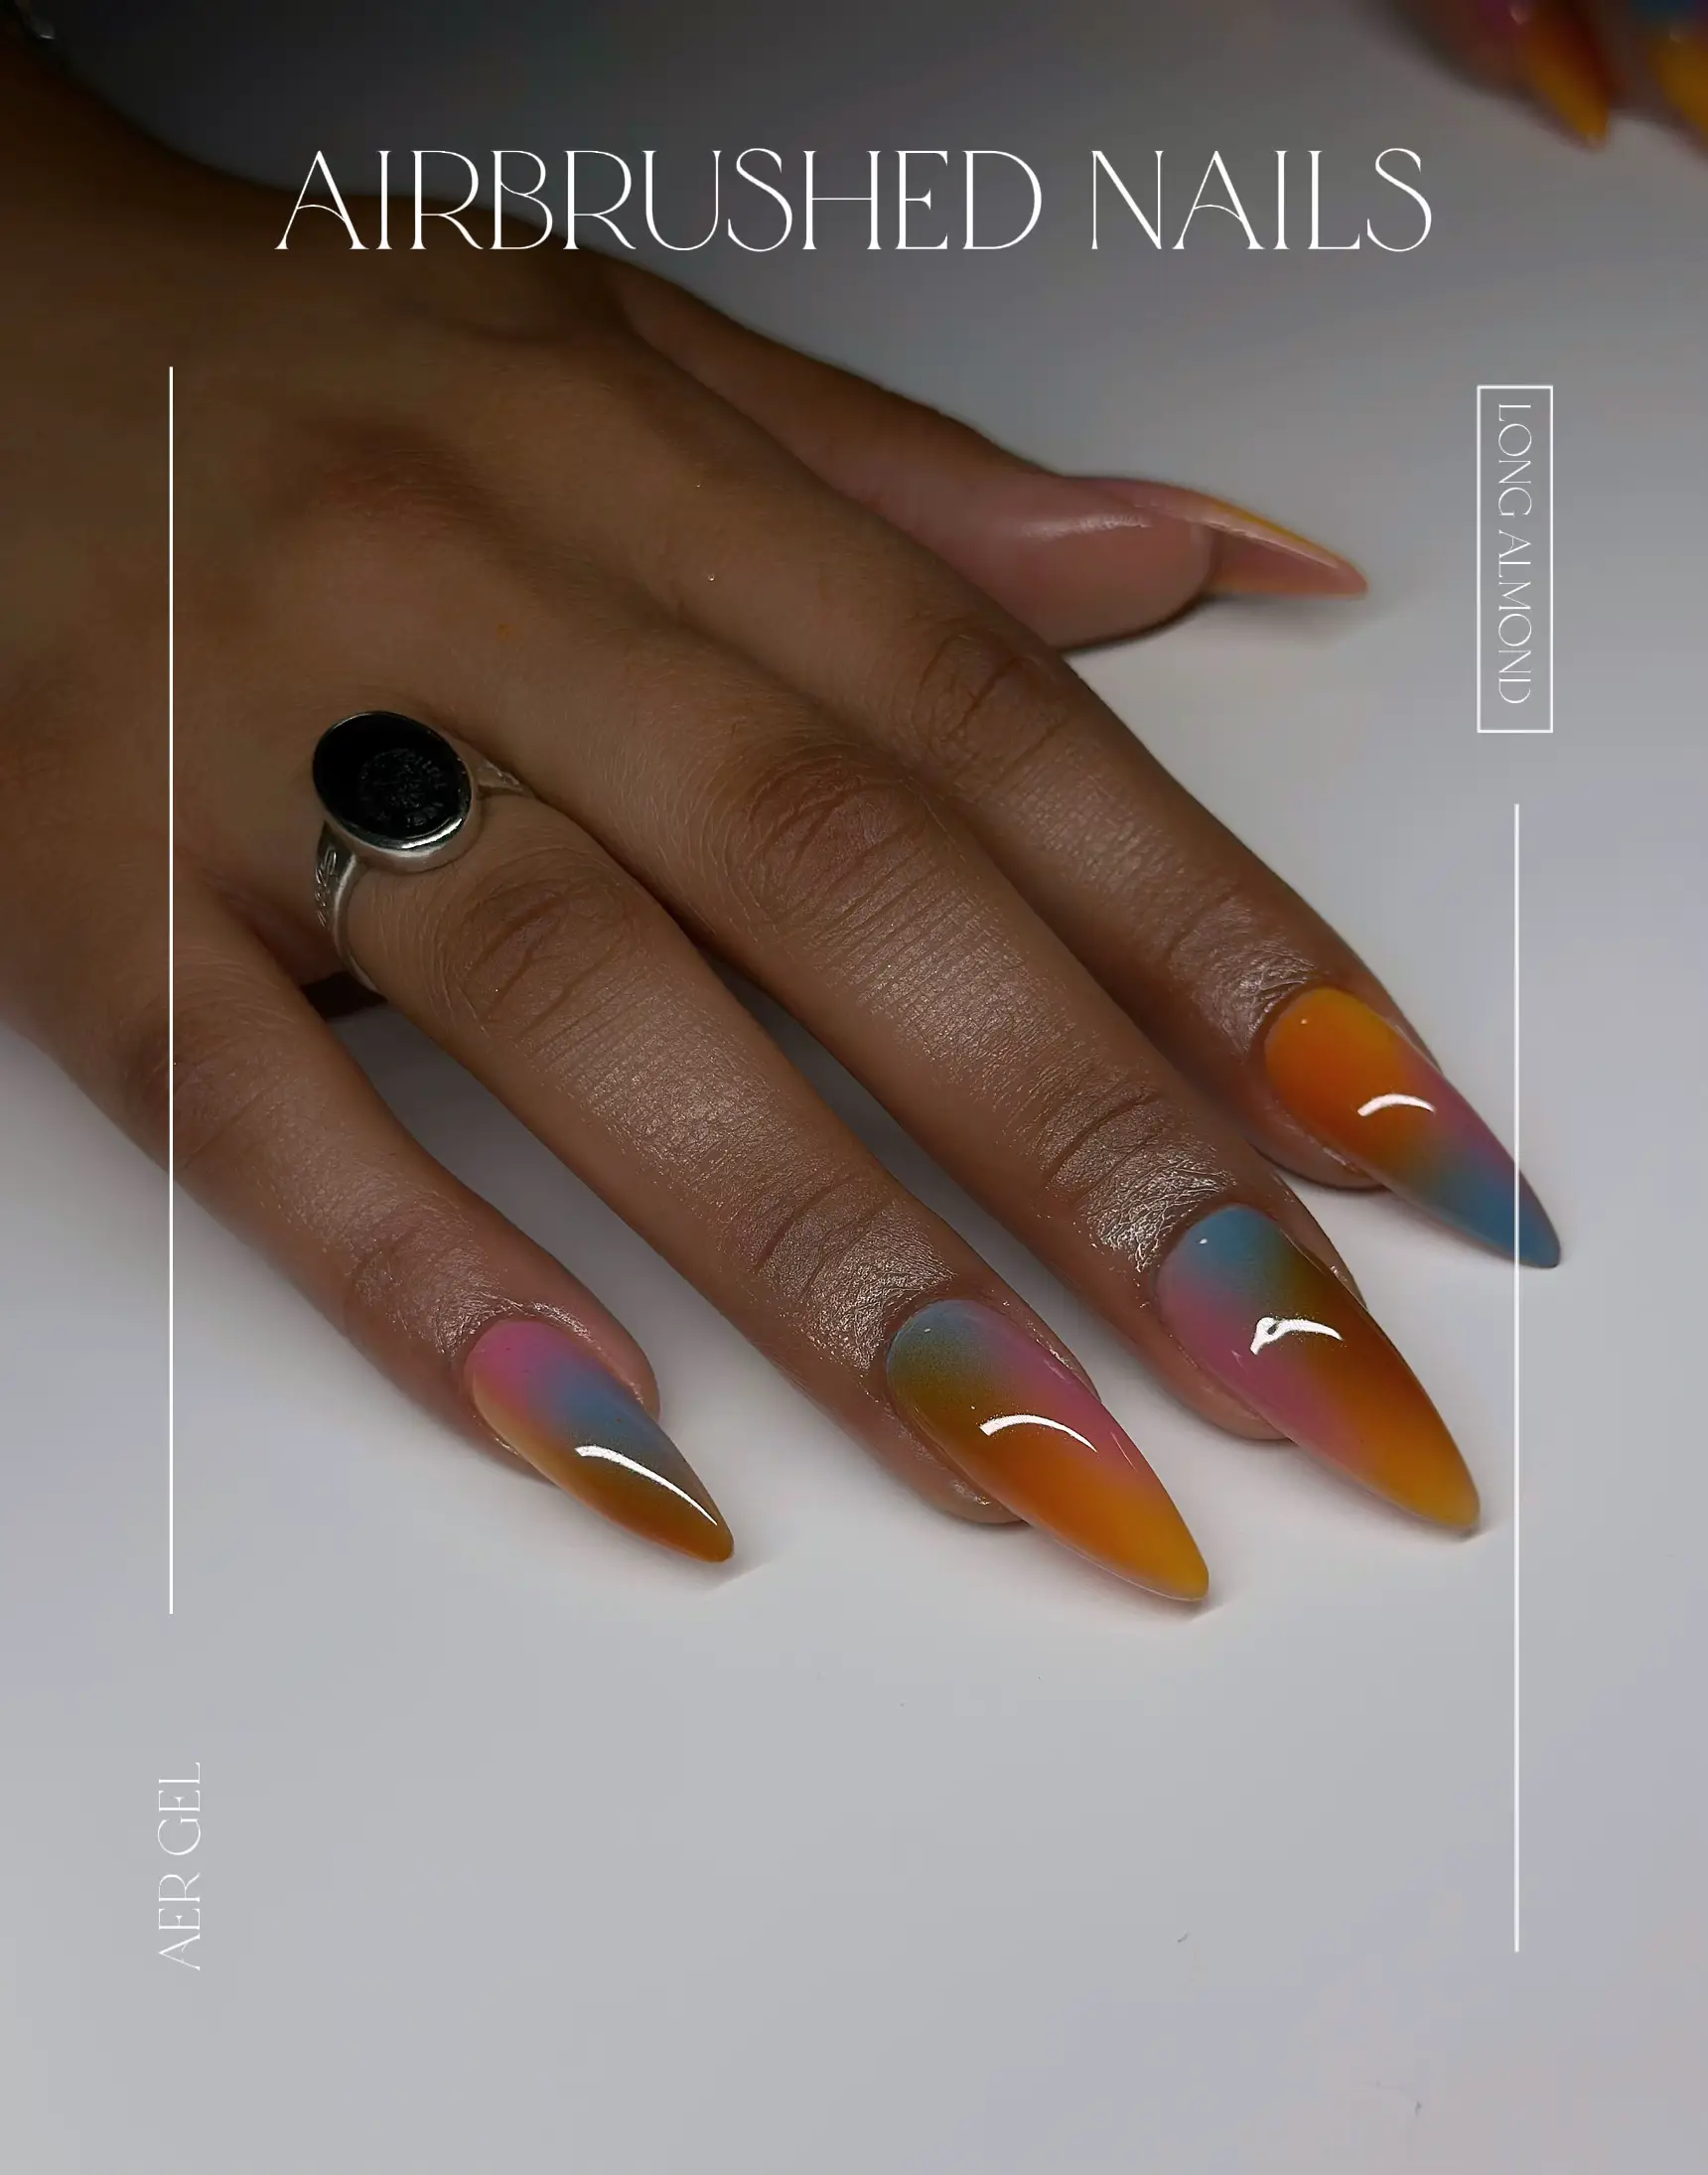 Ombré nails  Airbrush nails, Ombre nails, Short acrylic nails designs